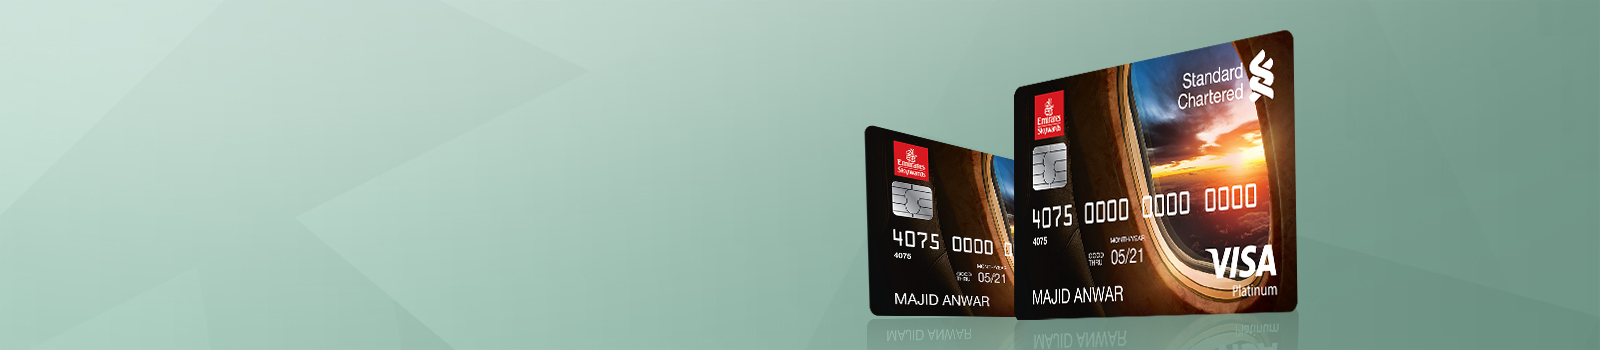 Emirate Standard Chartered Platinum Credit Card